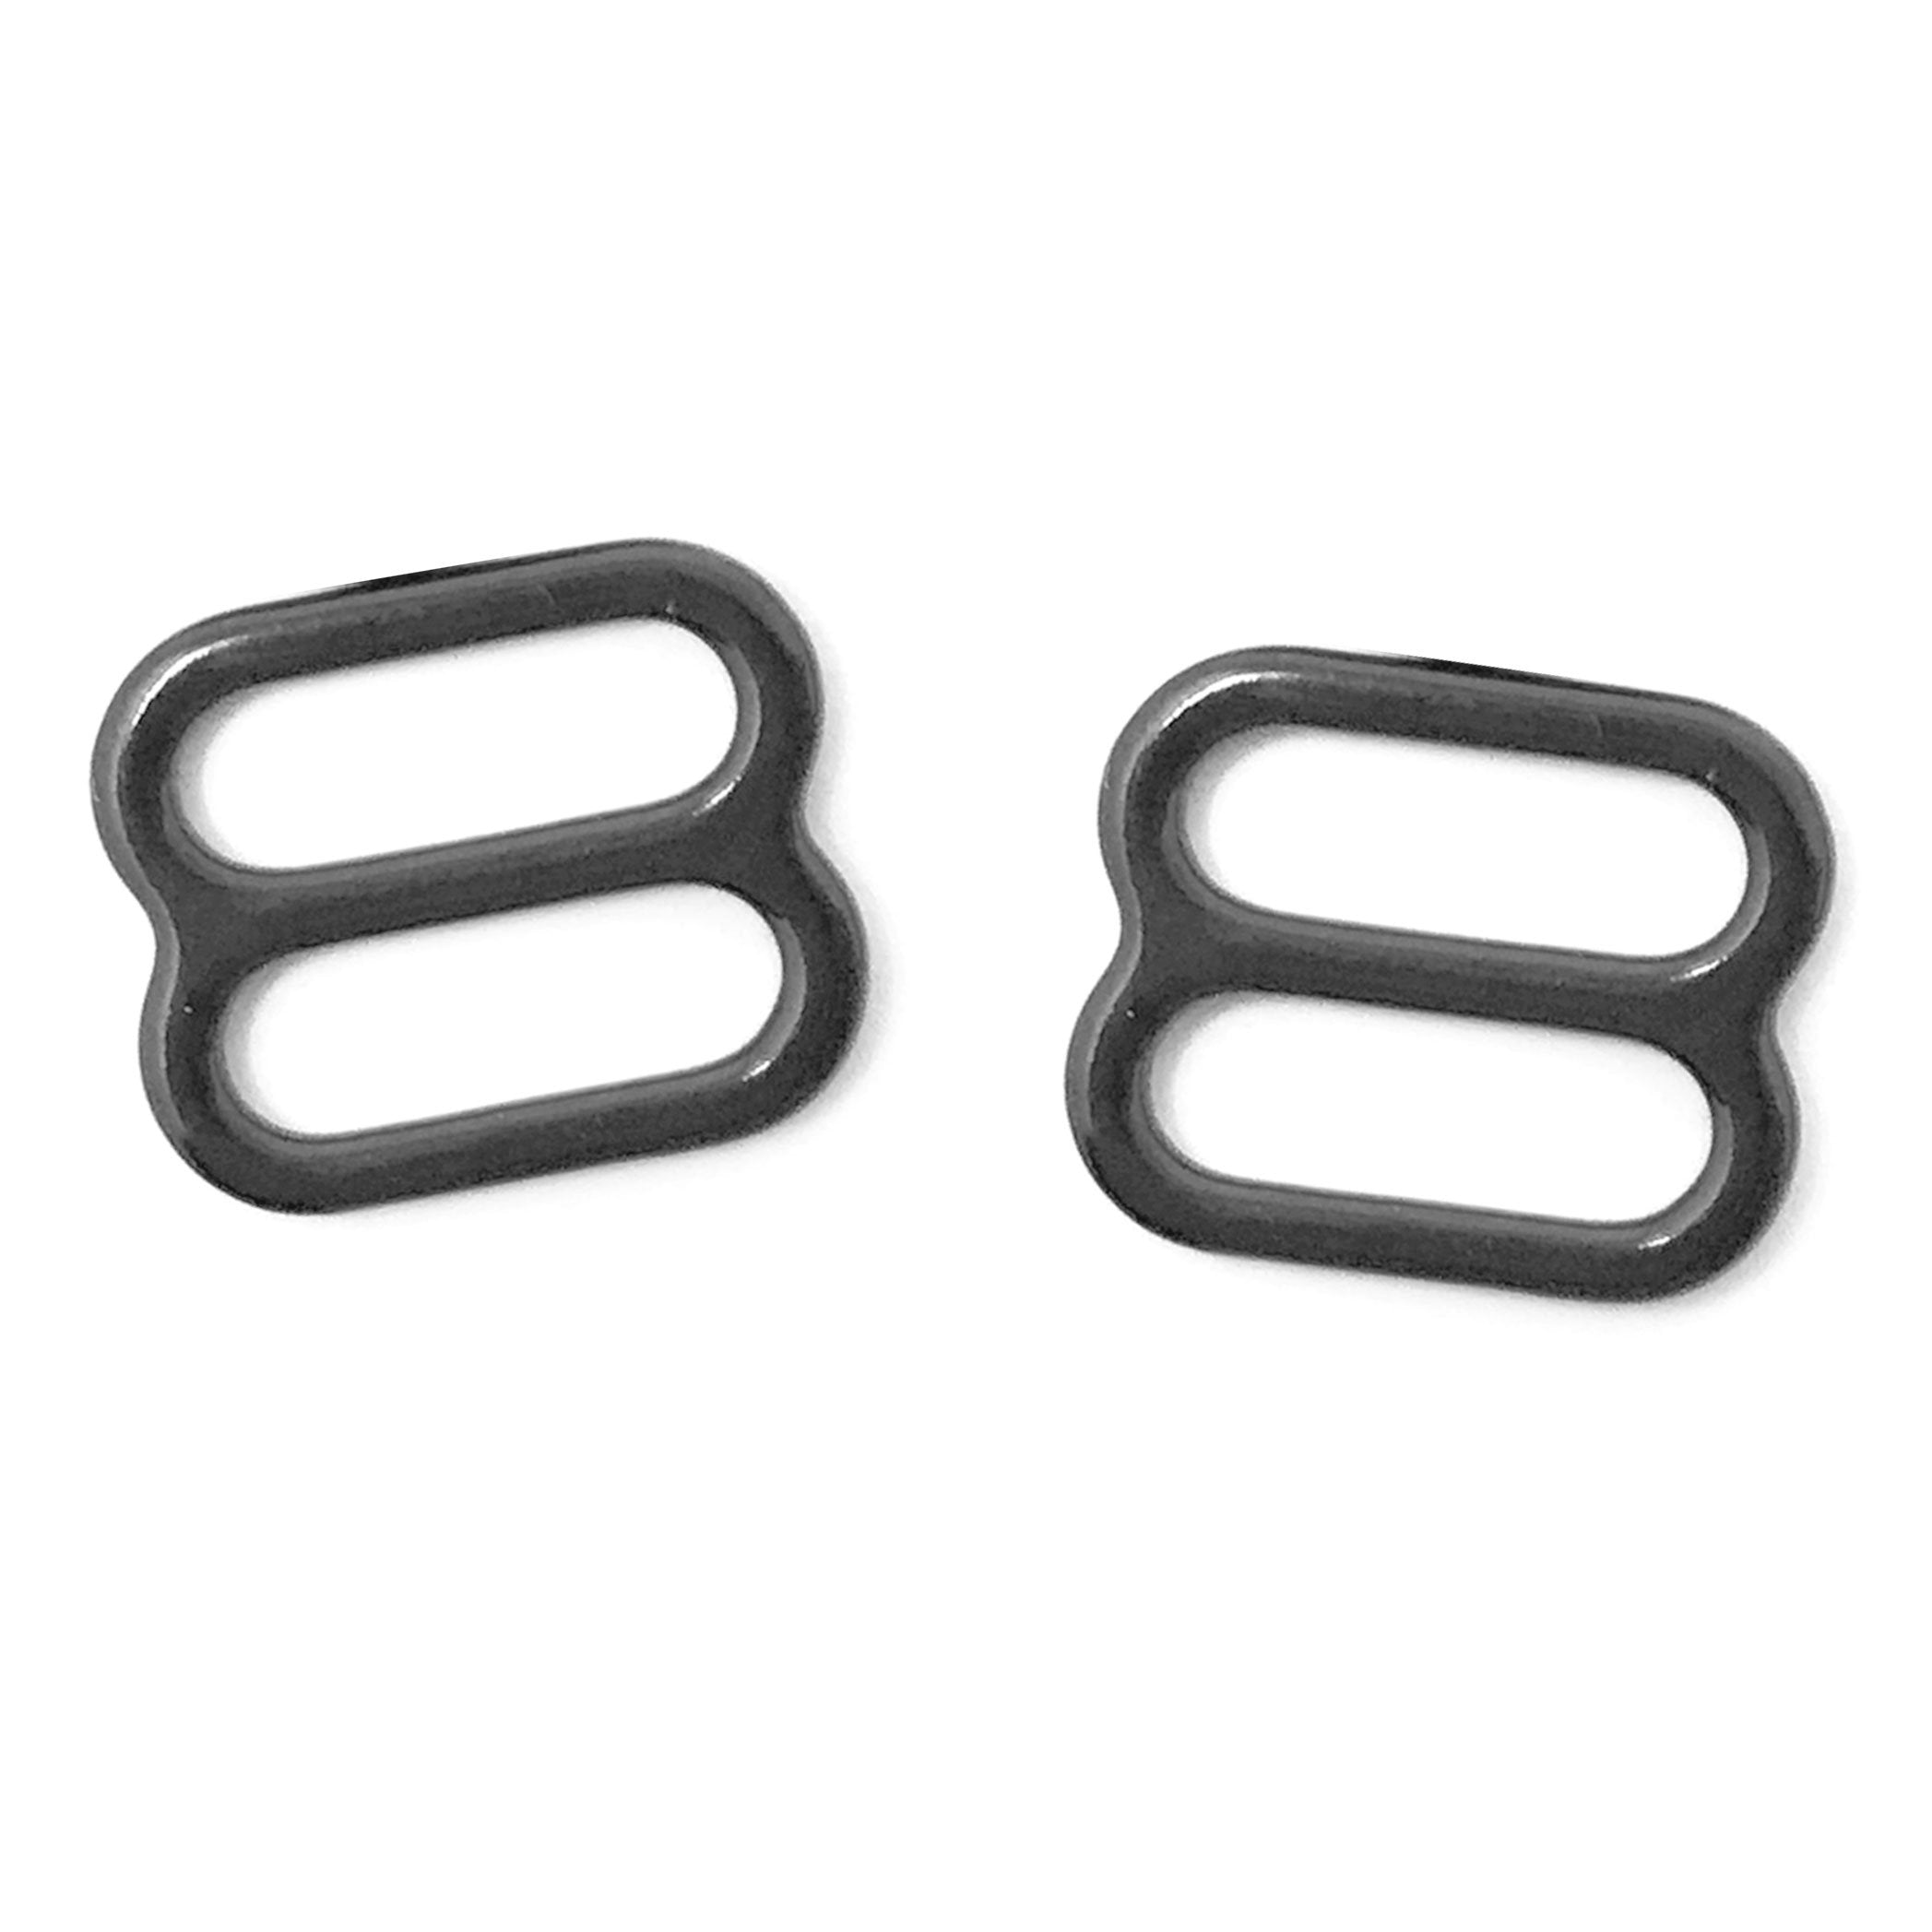 Set of 2 Rings OR 2 Sliders Bra Strap Sliders in Charcoal Grey- 3/8" (10mm) - Stitch Love Studio